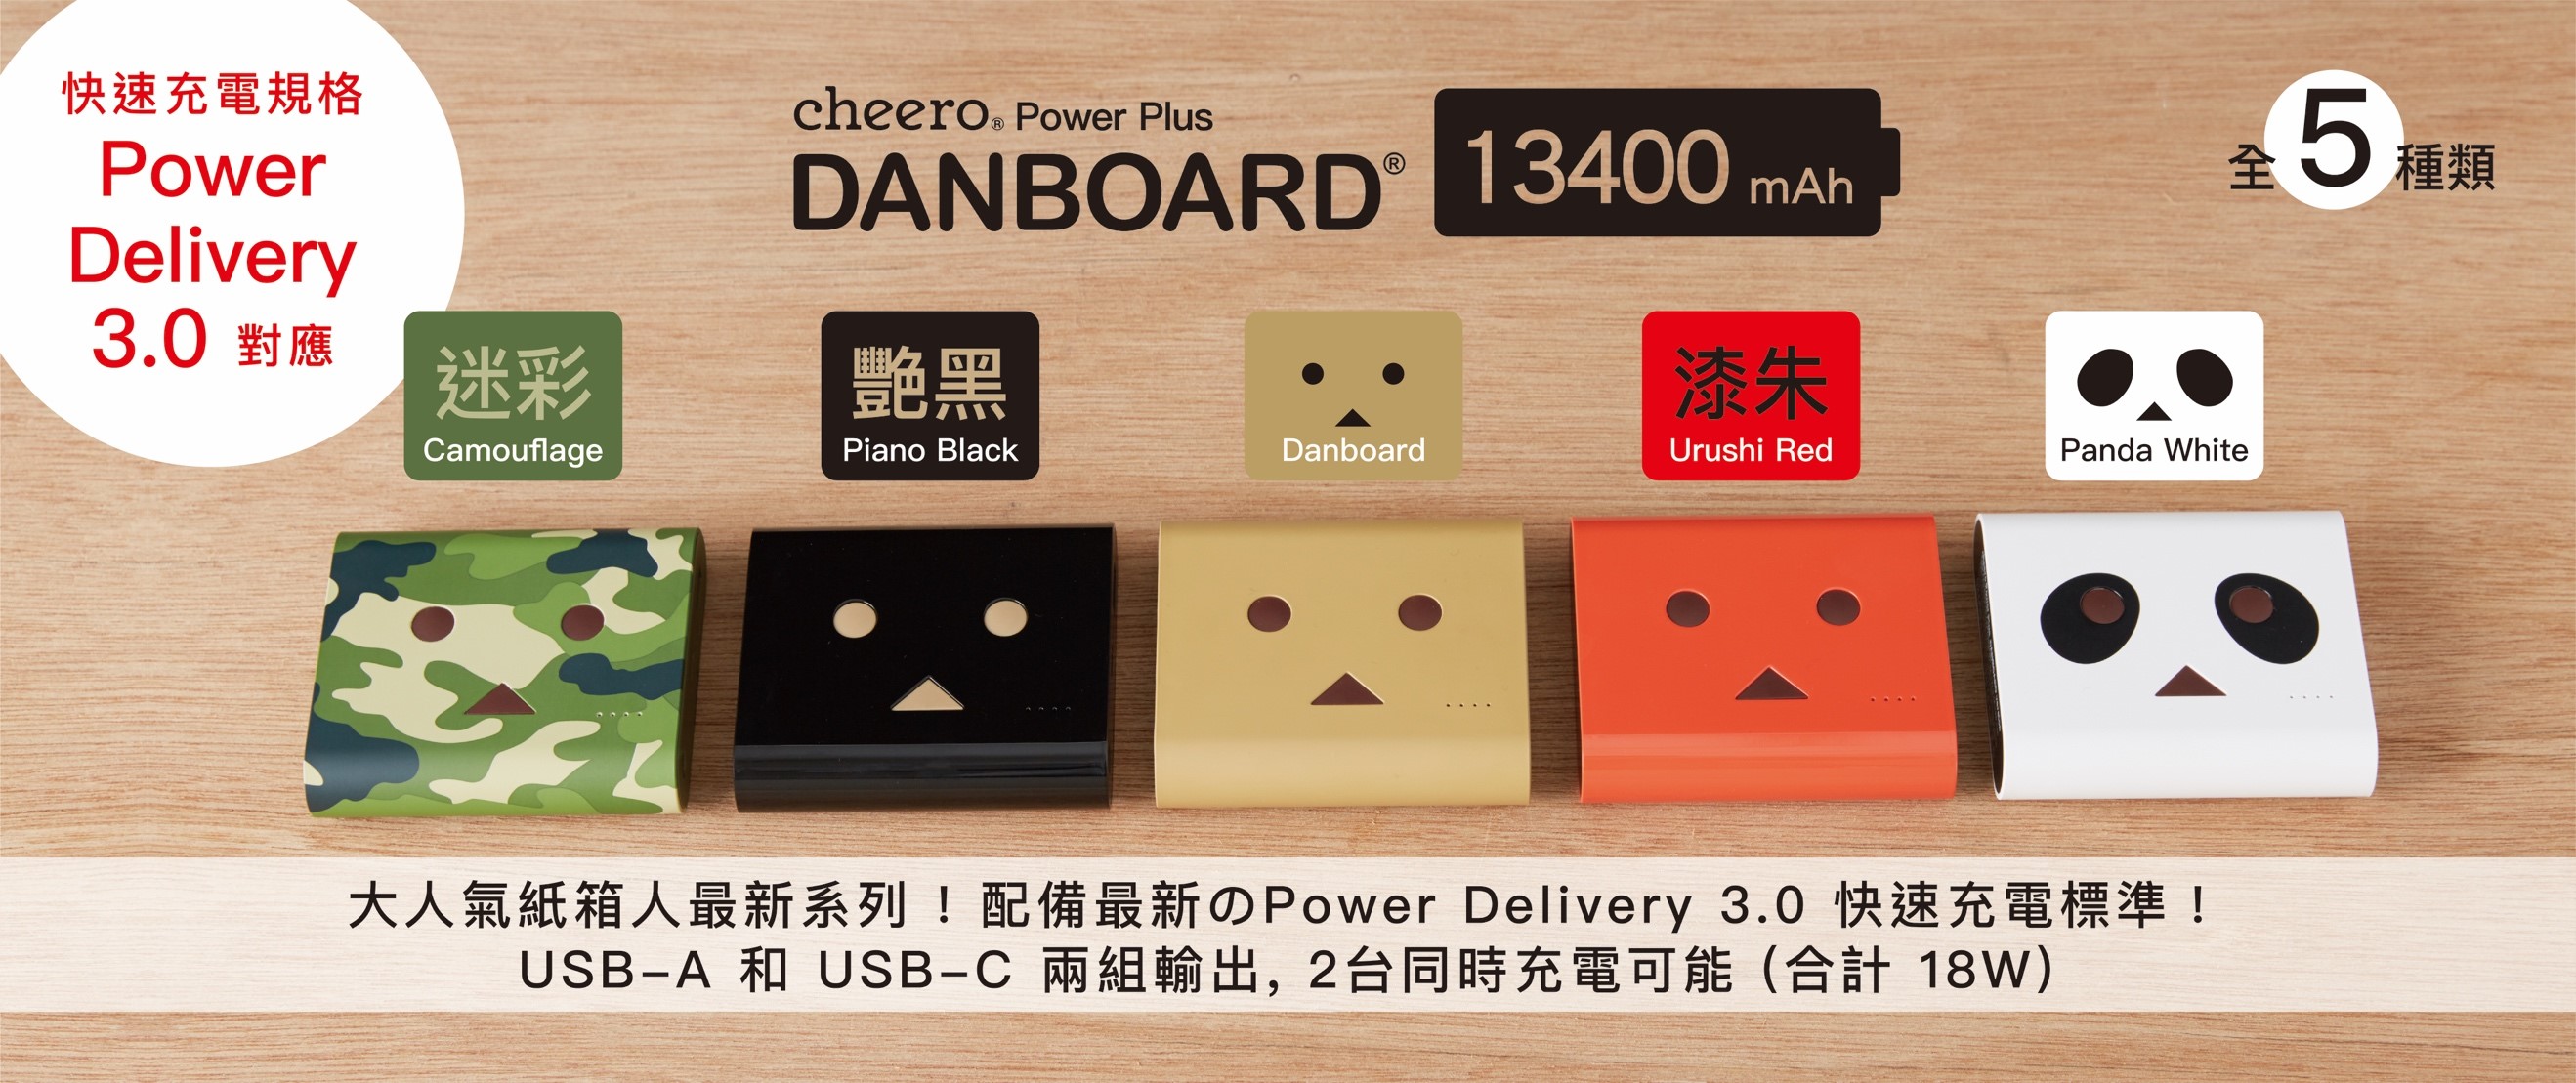 Cheero Power Plus DANBOARD/圖02.jpg